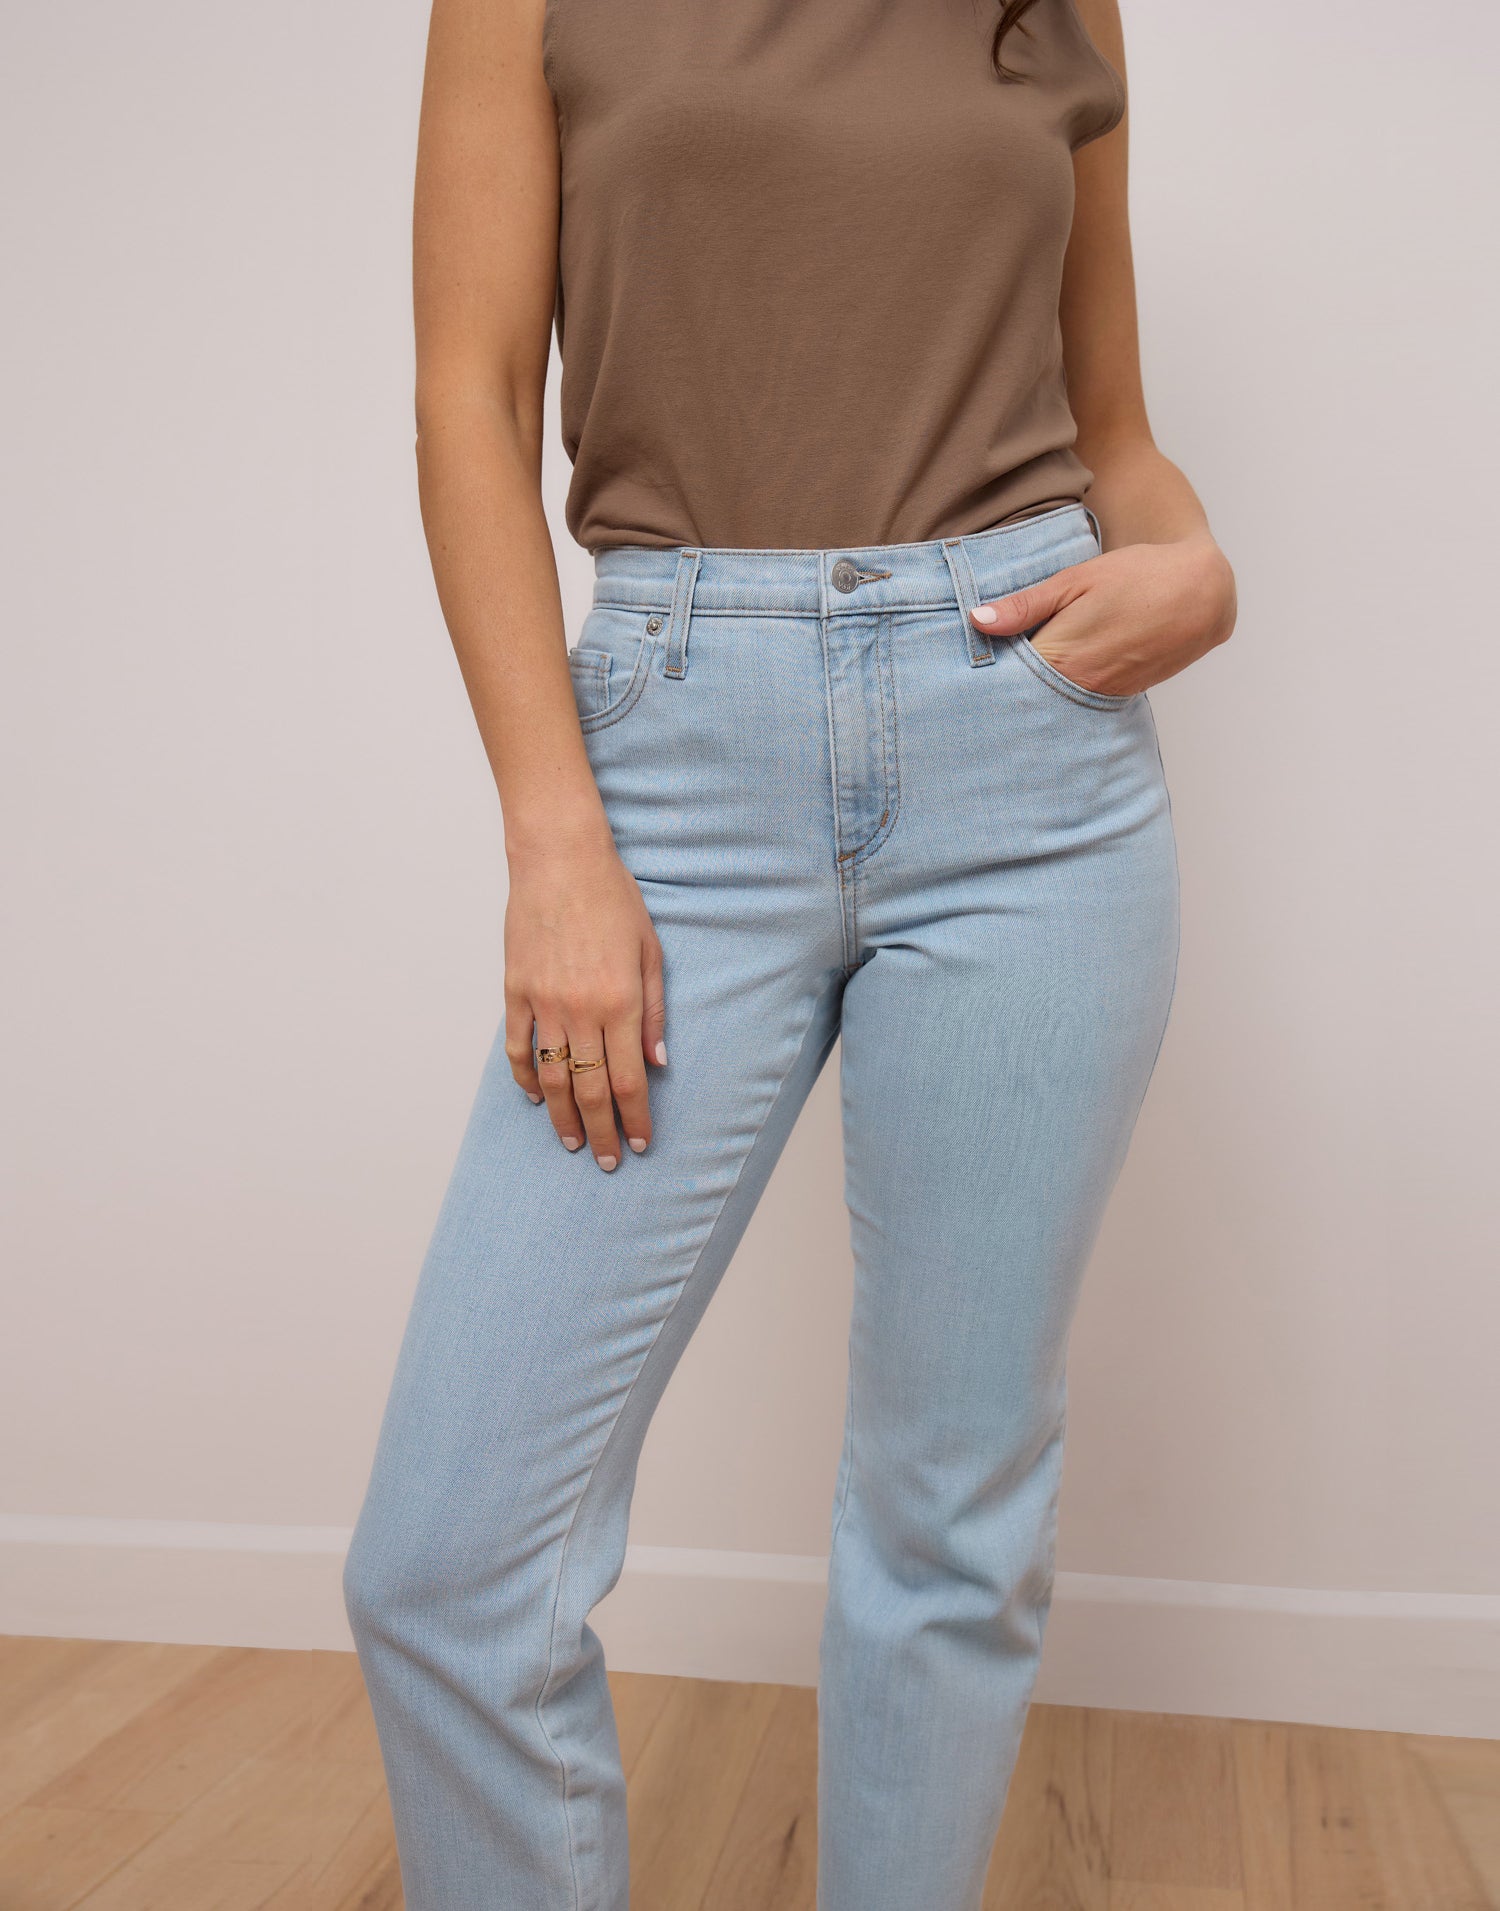 Buy Plazma Jeans Women's Skinny Fit Mid Waist Phone Color